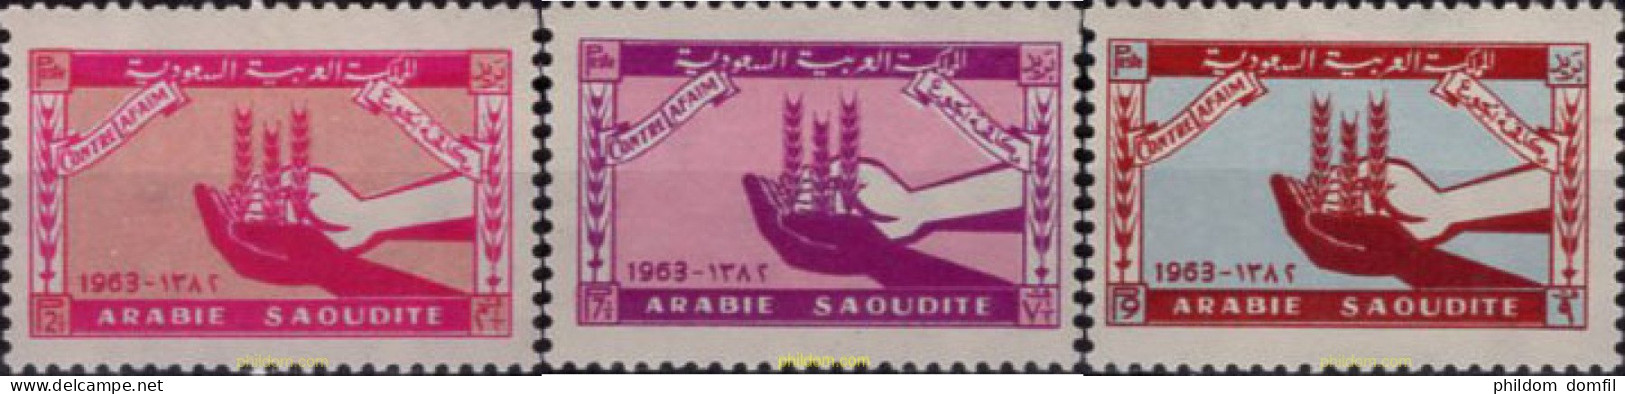 632875 MNH ARABIA SAUDITA 1963 CAMPAÑA CONTRA EL HAMBRE - Saudi Arabia